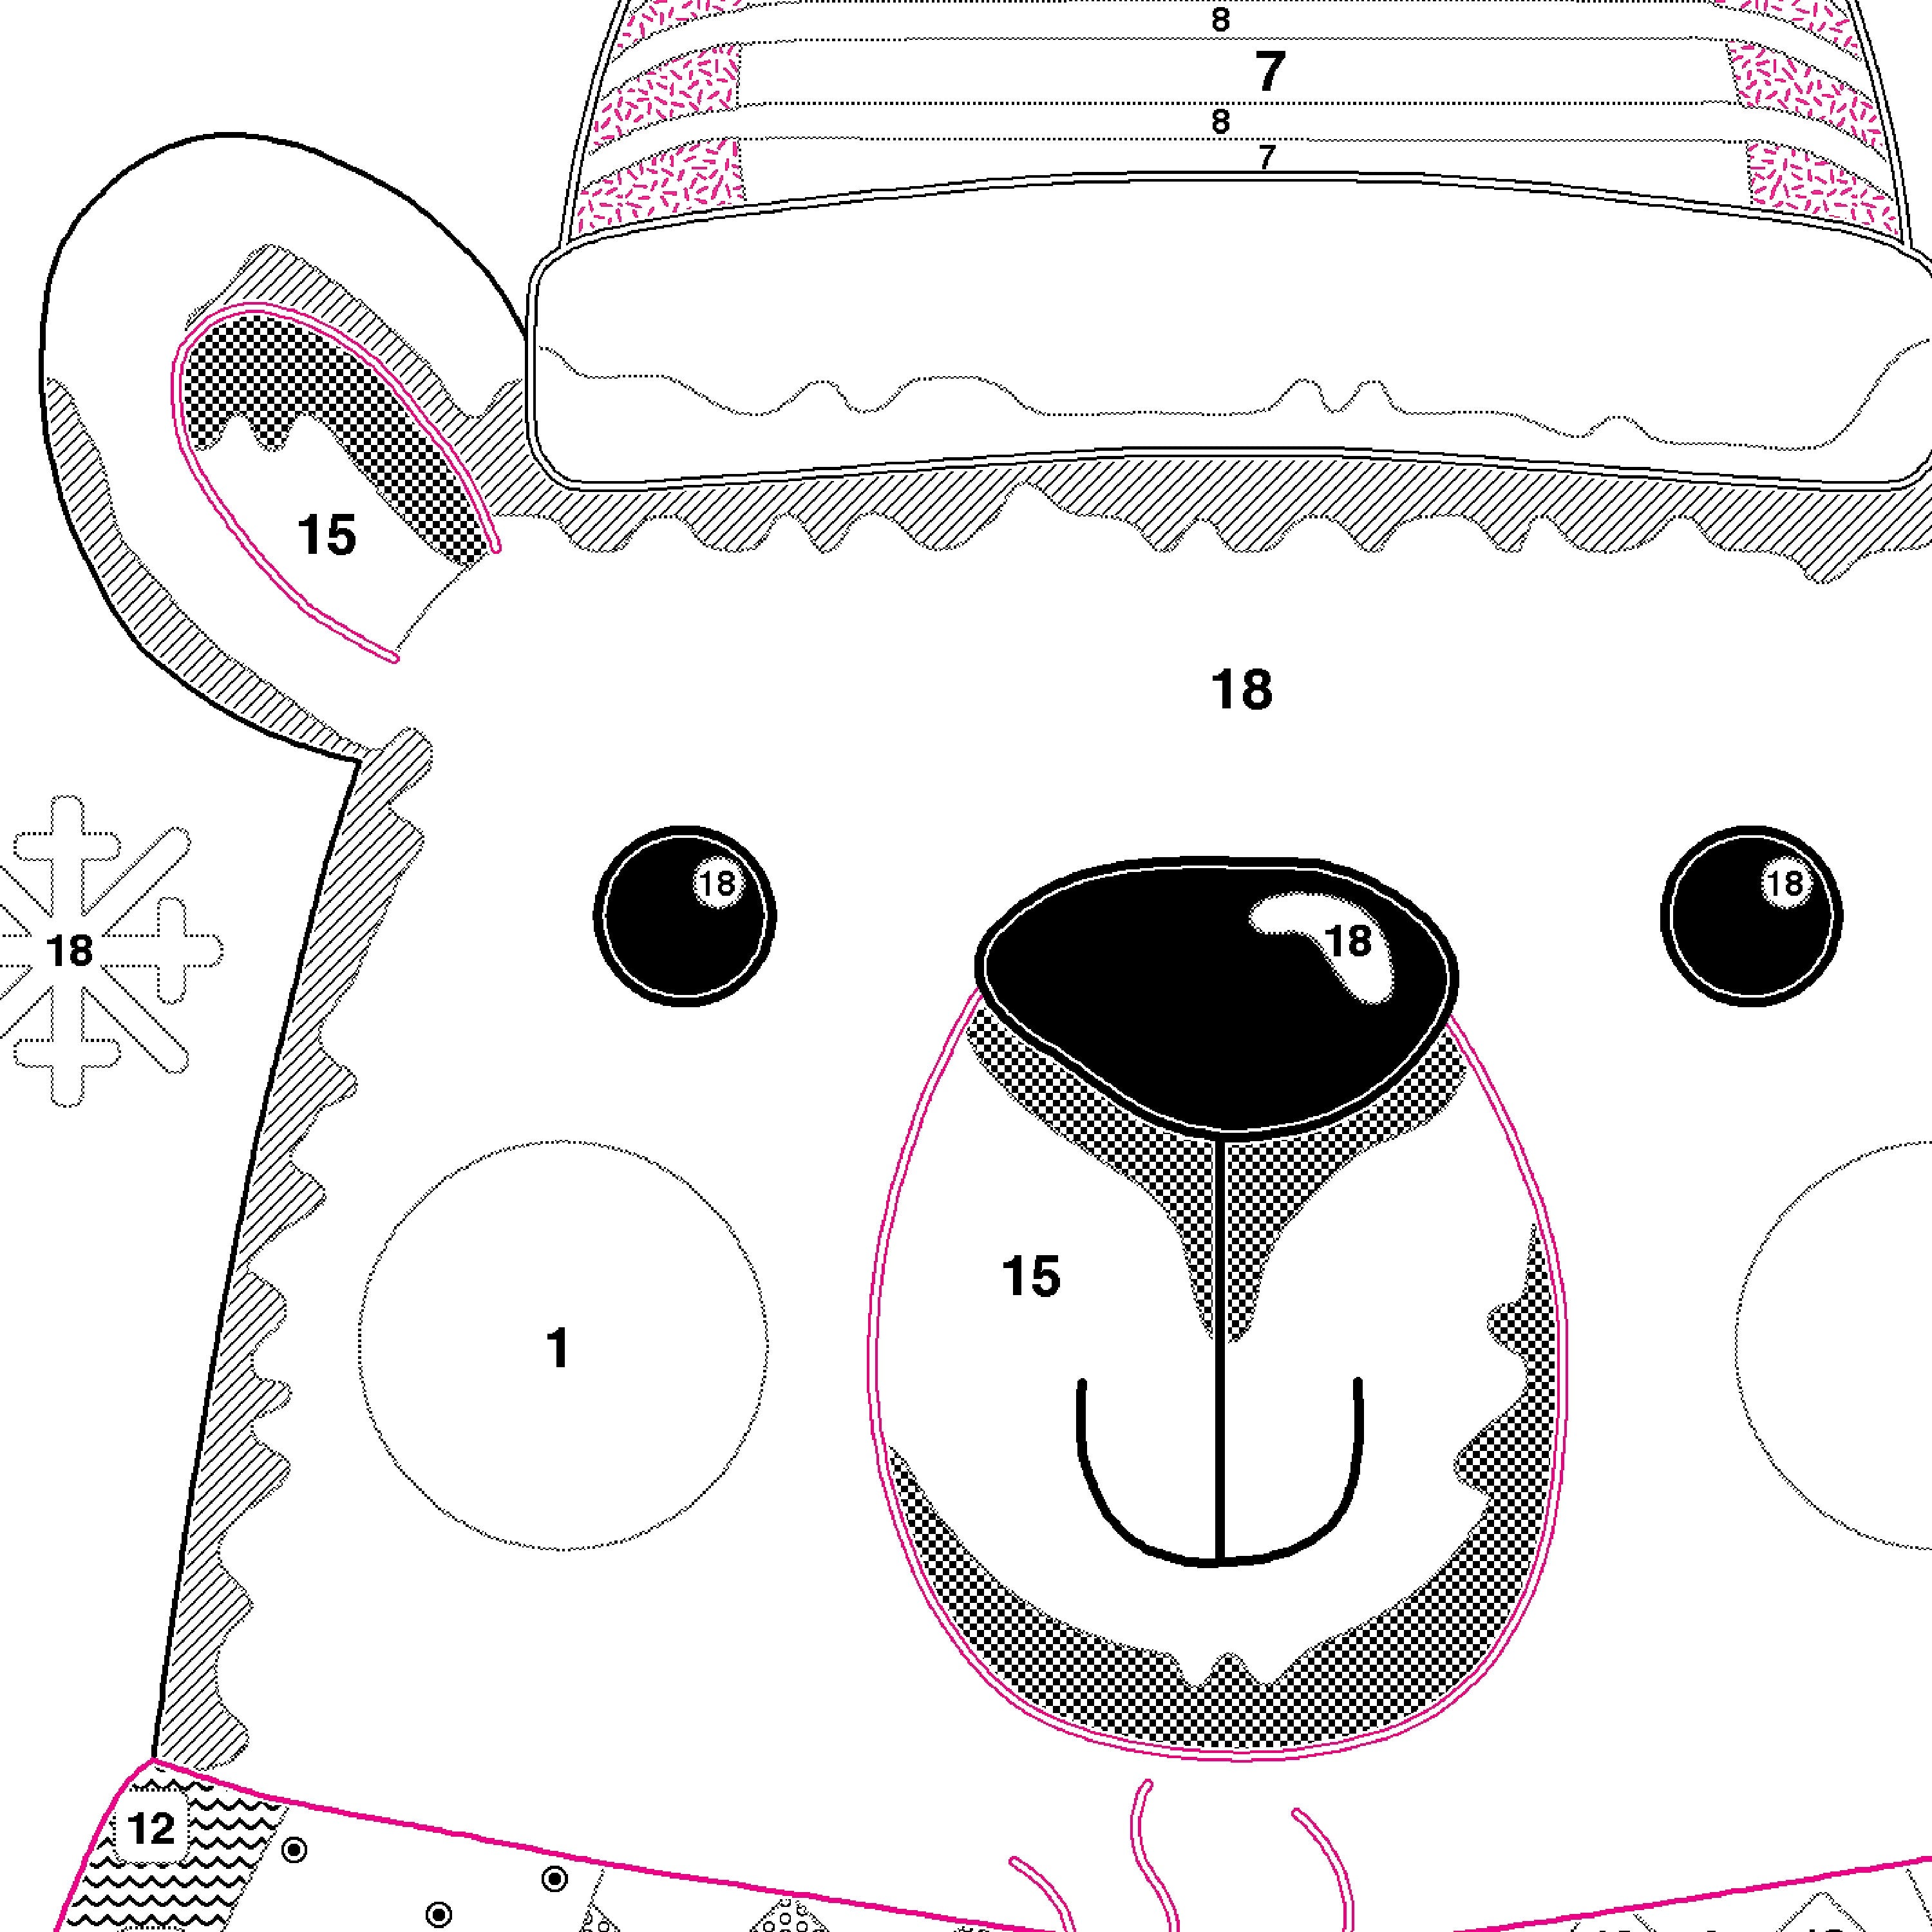 DMG DIY Dimensions Chill Out Polar Bear Christmas Needlepoint Stocking Kit 09162